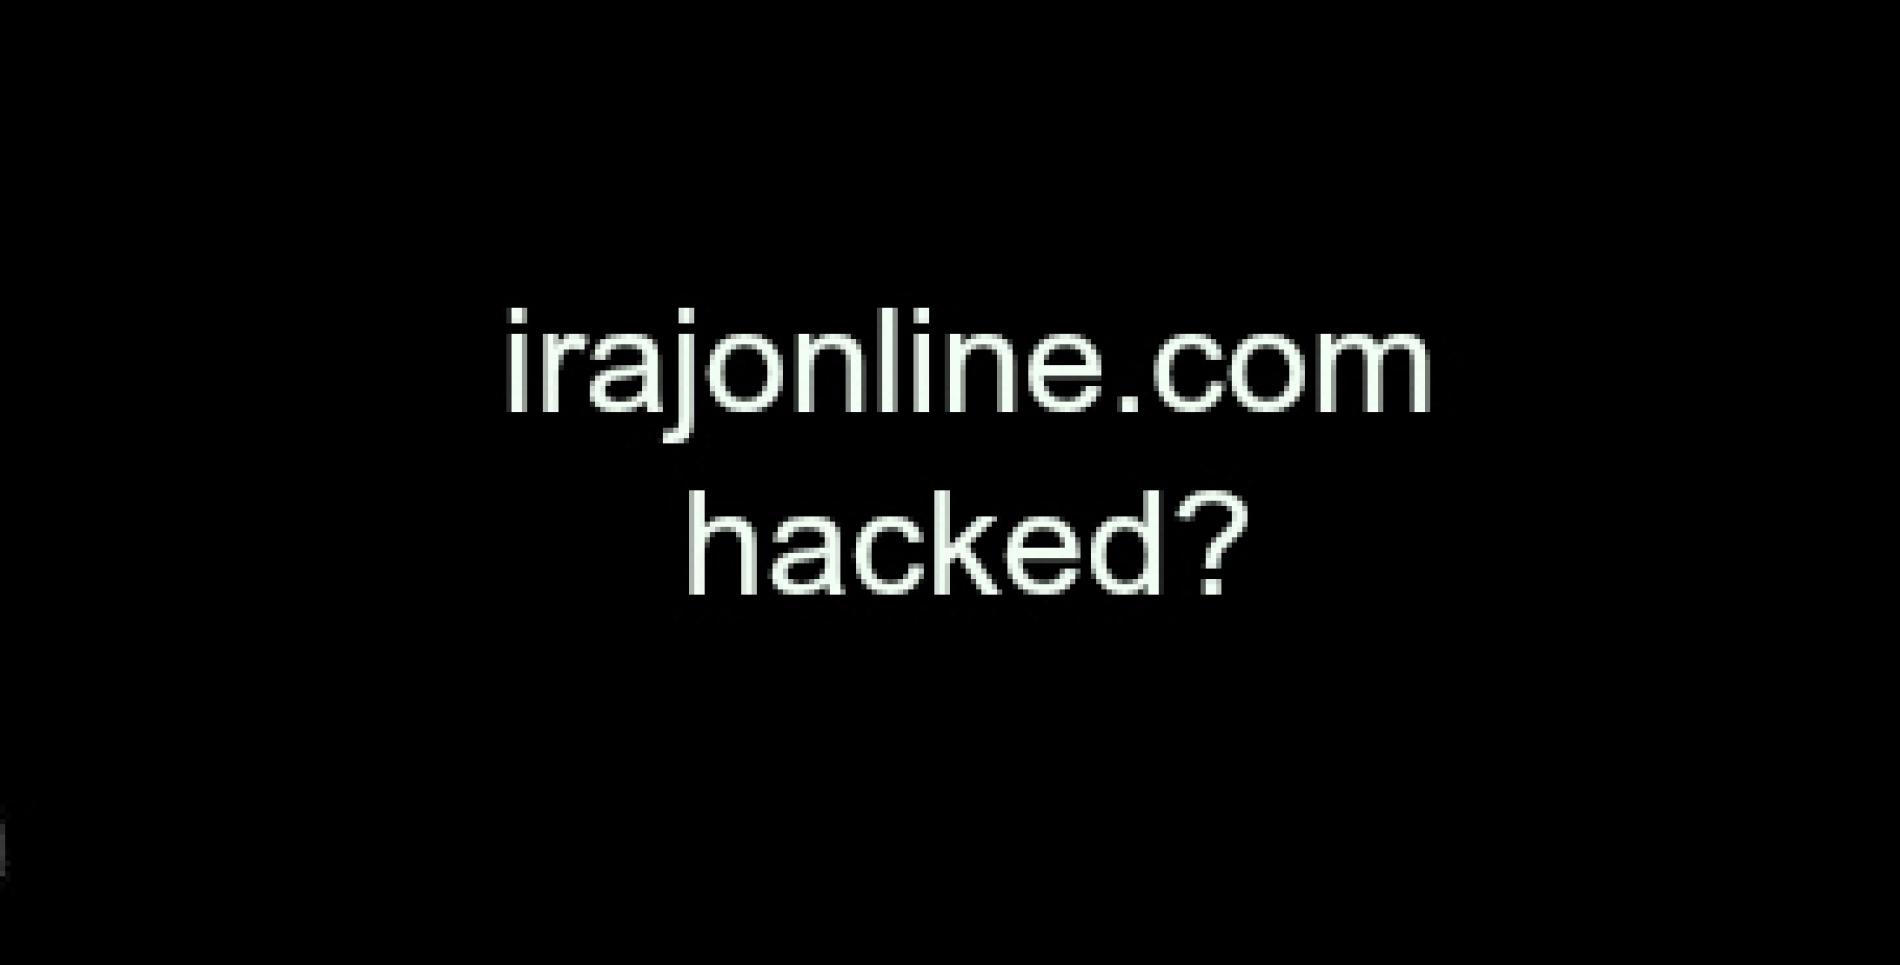 Irajonline.com hacked